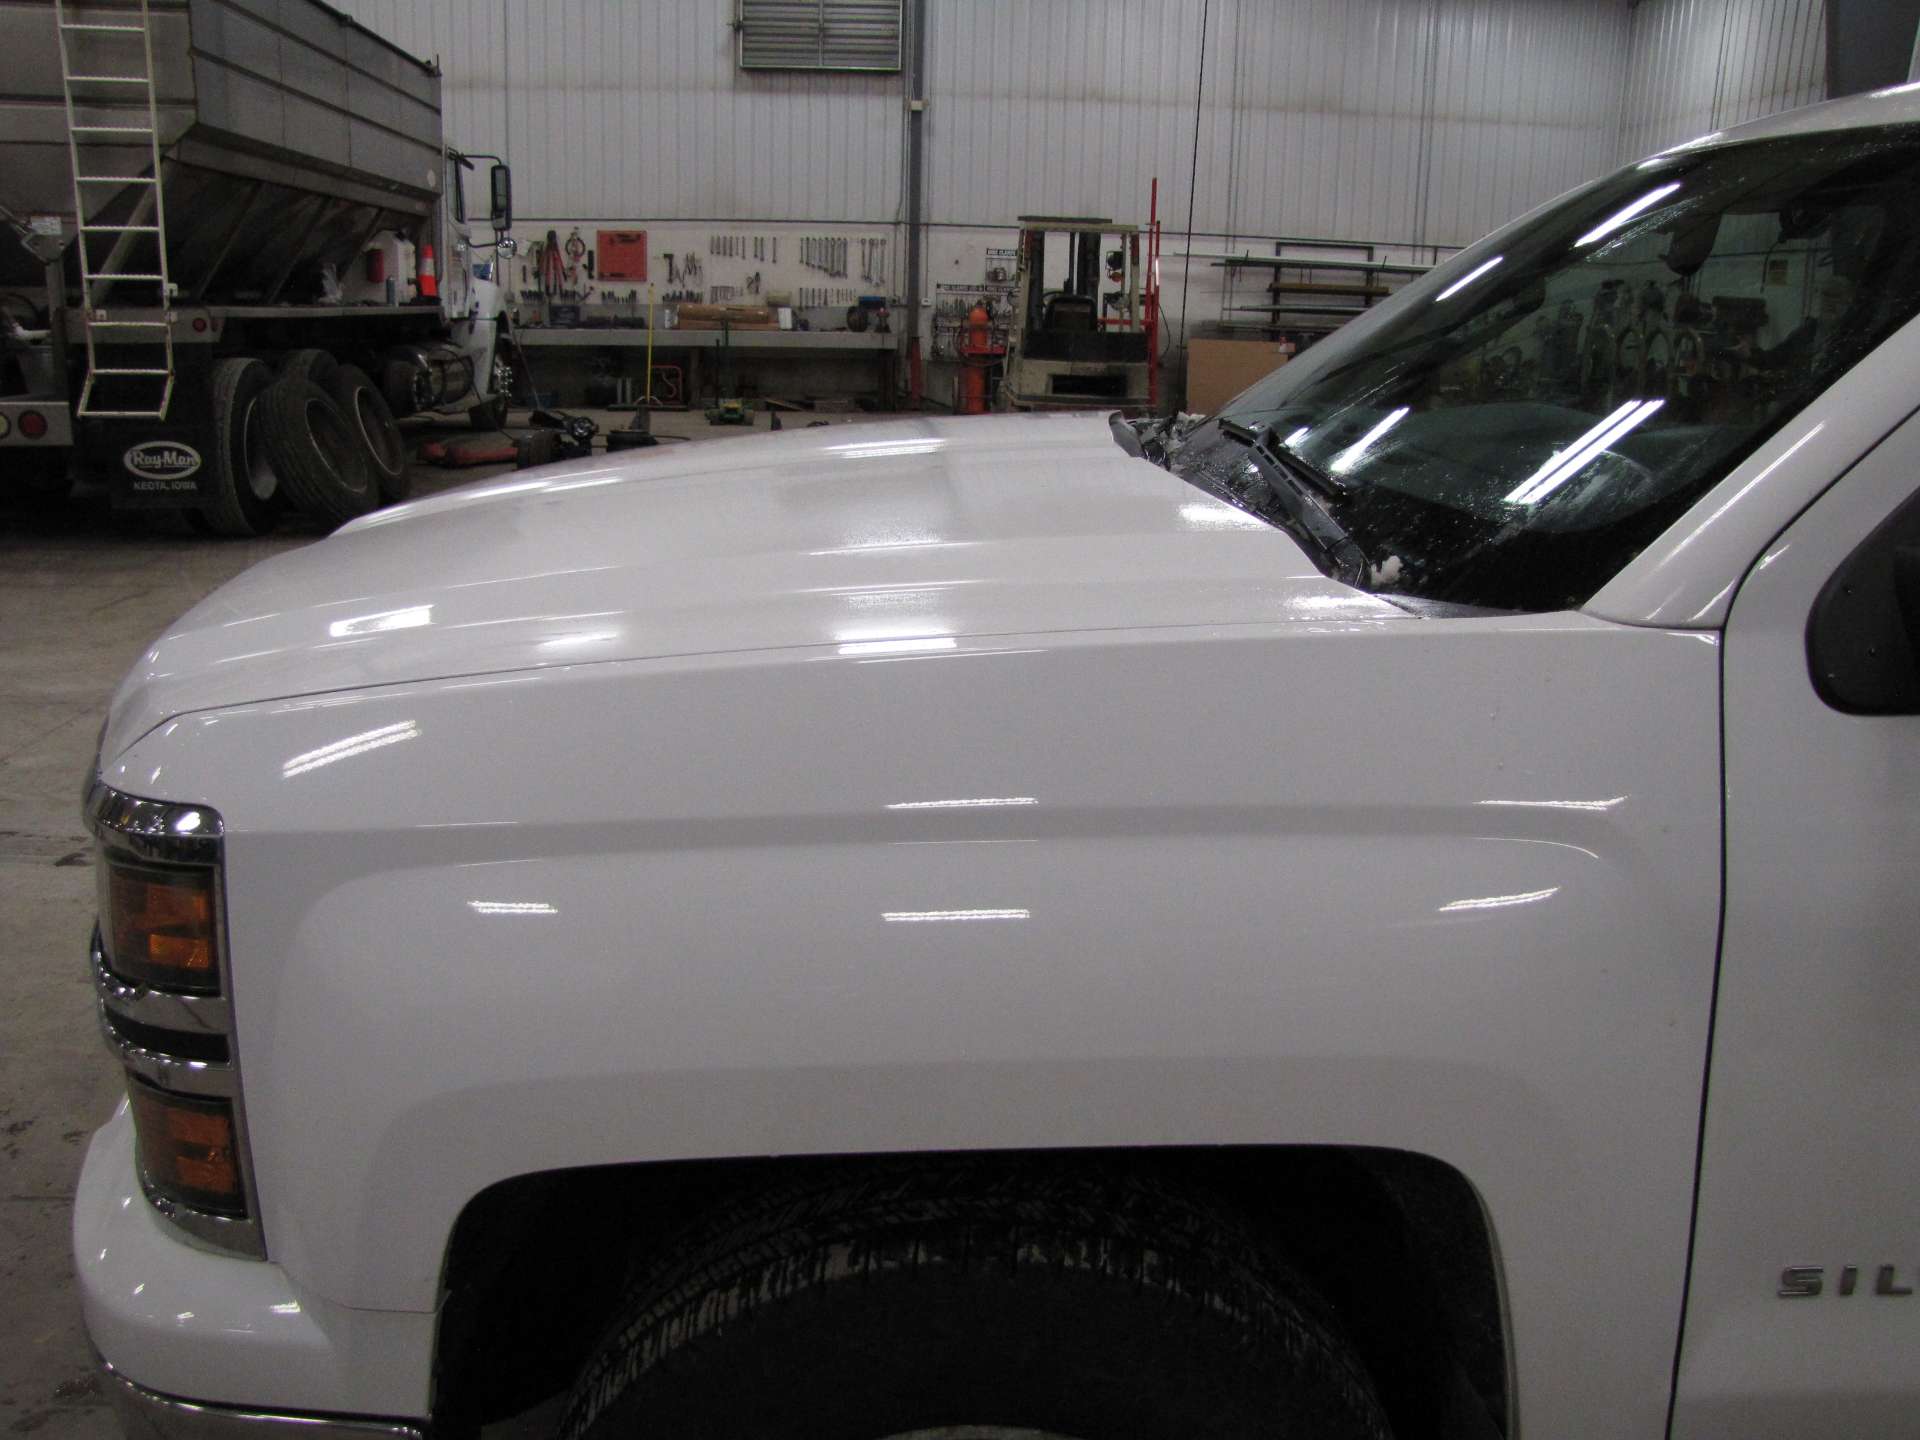 2014 Chevy Silverado 1500 pickup truck - Image 28 of 57